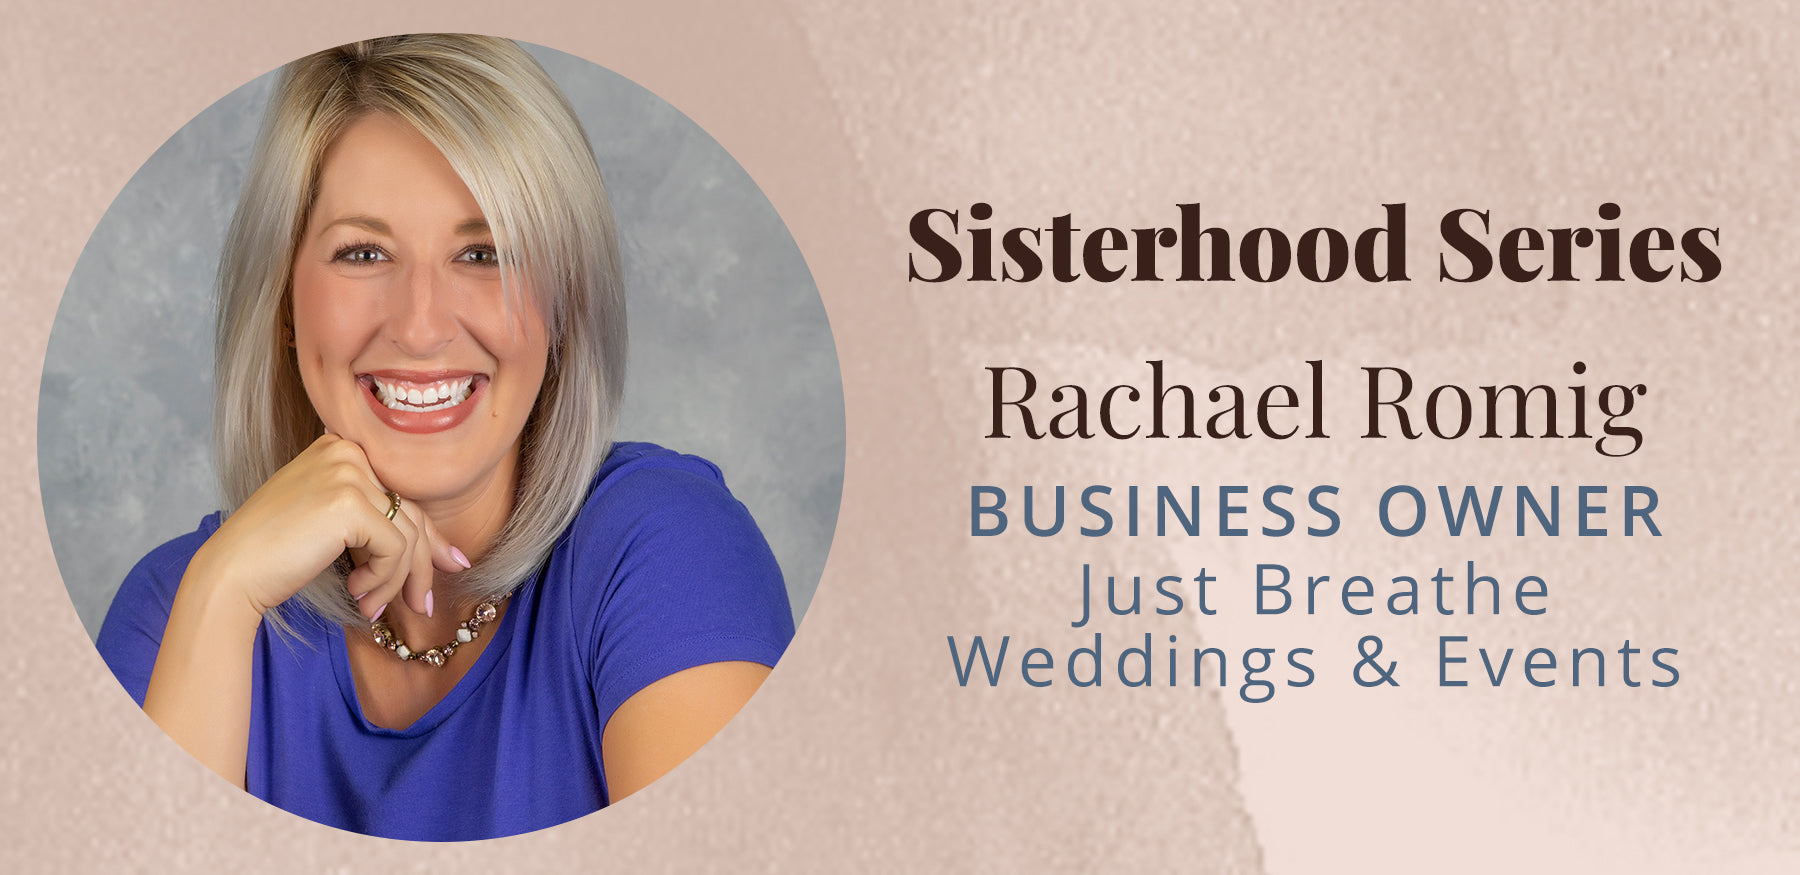 <!--The Sisterhood Series with Rachael Romig-->